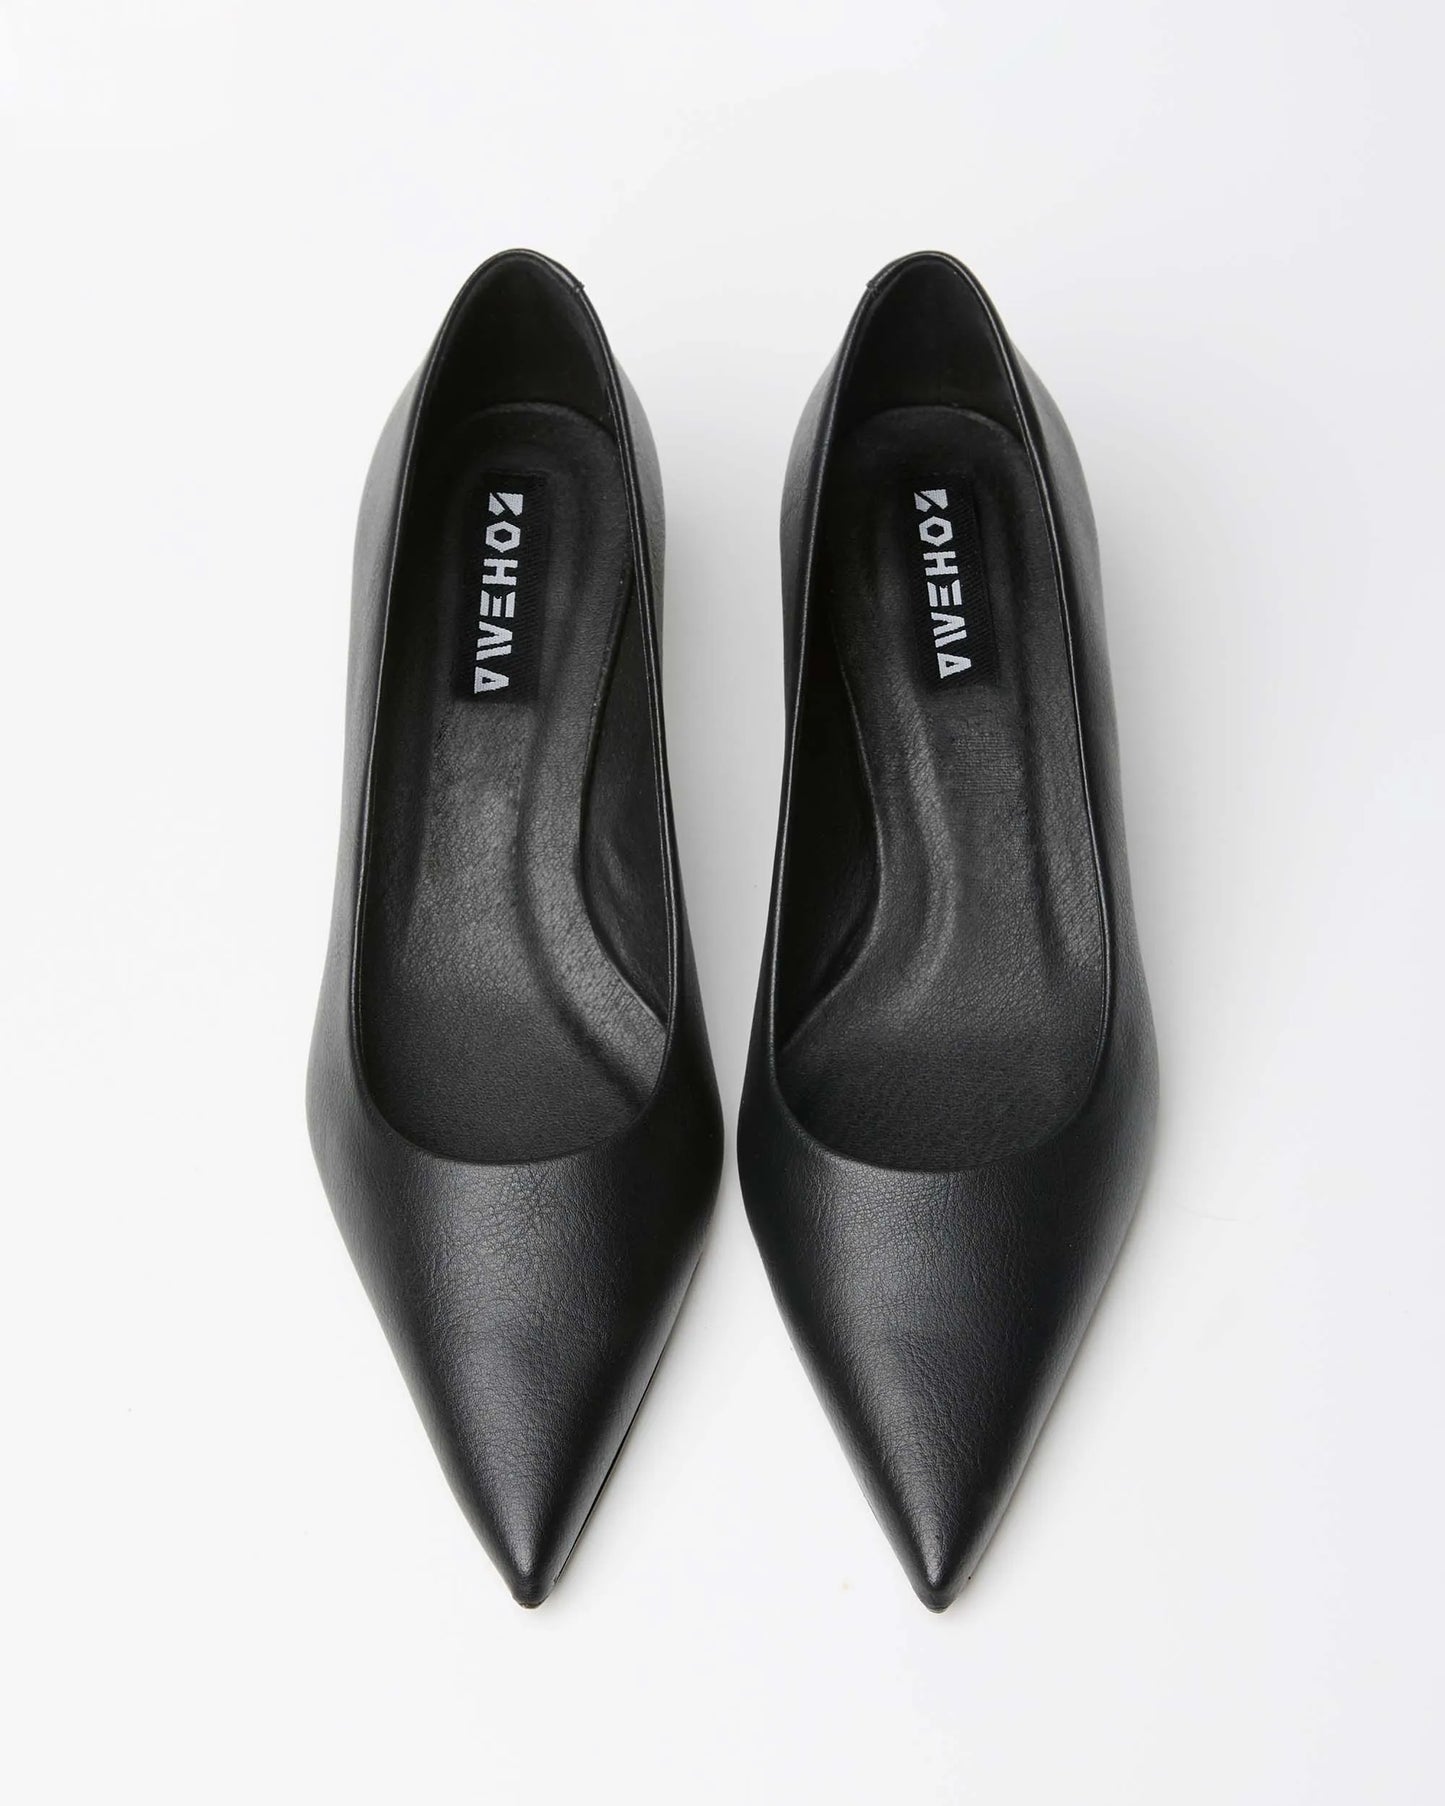 Siren Heels kitten heels style shoes made of grape-based vegan leather